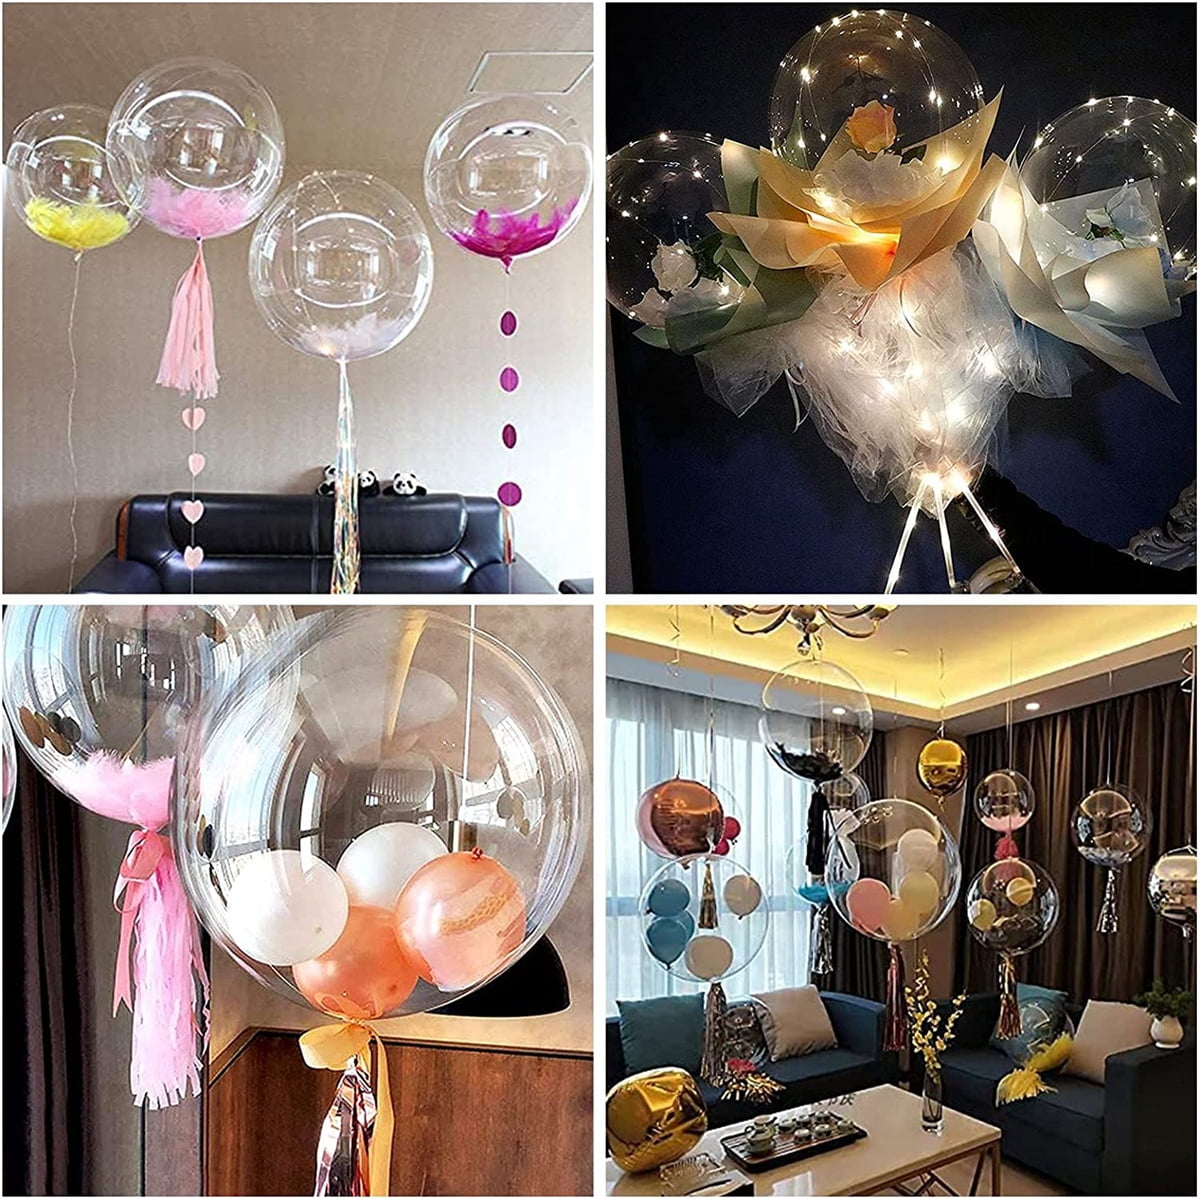 Tepsmf Balloon Spray 100ml - Instant Gloss & Vibrant Finish - Enhance Party  Decor - Birthdays, Weddings, Special Events - Easy Application 